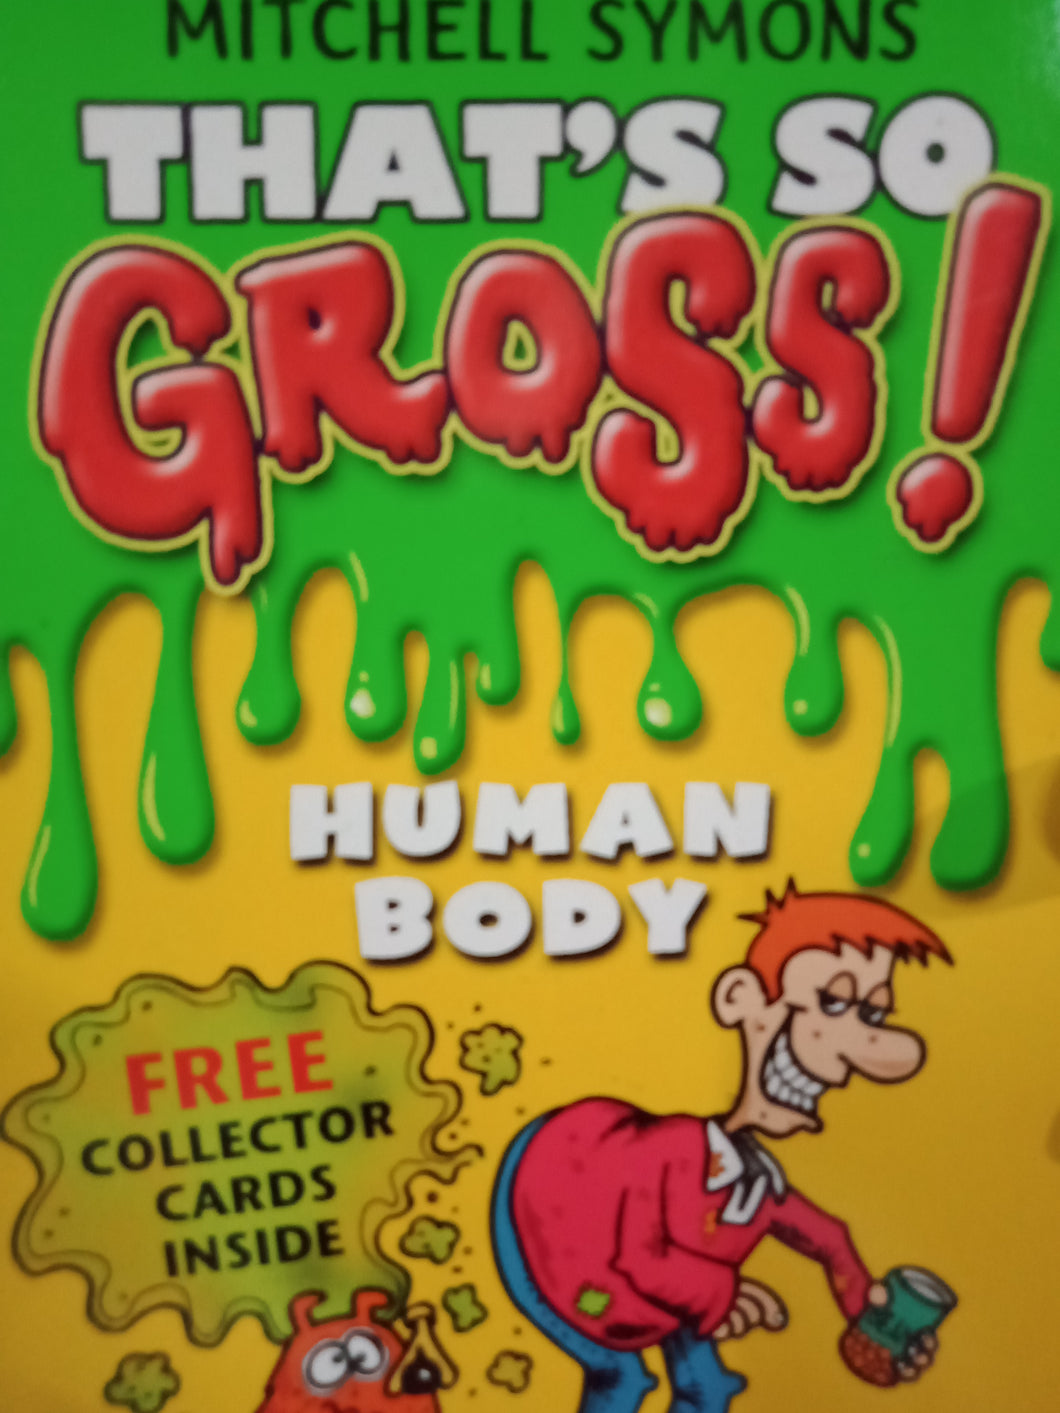 That's So Gross! Human Body